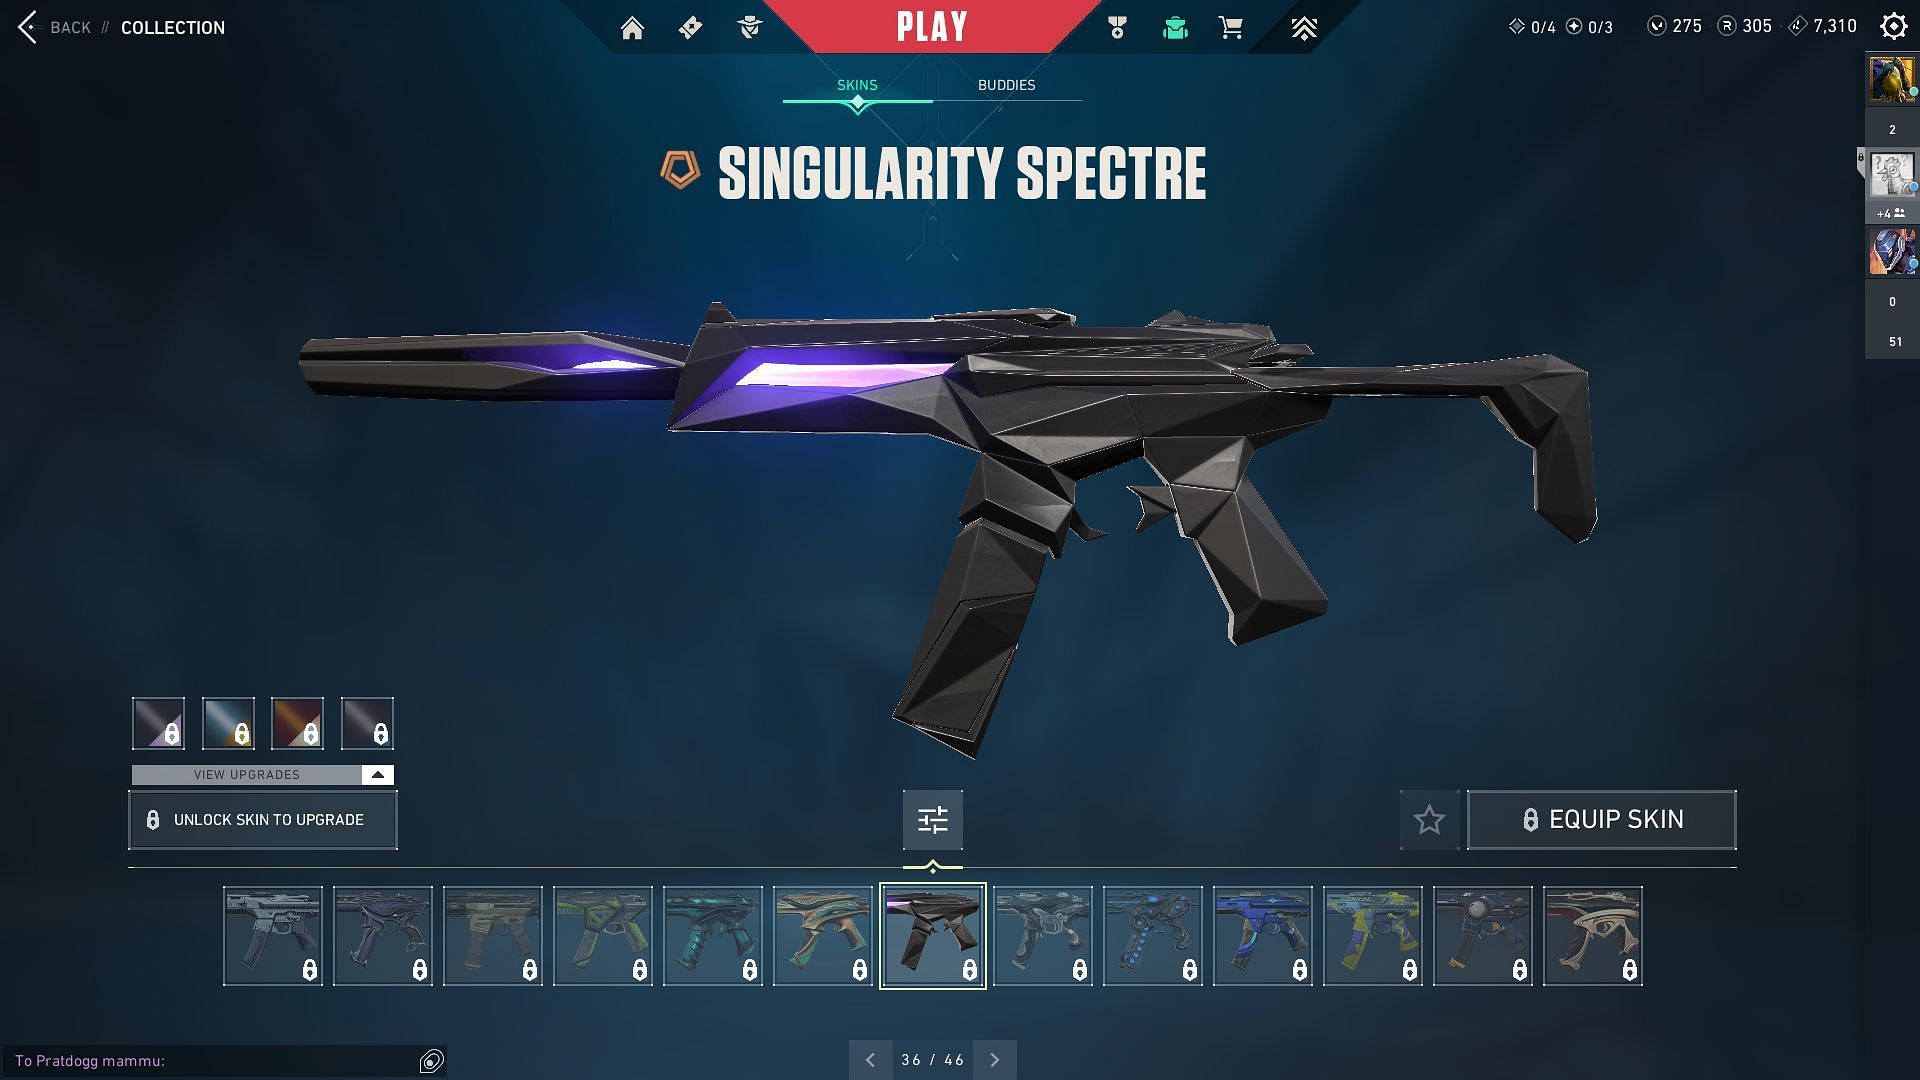 Singularity Spectre (Image via Sportskeeda and Riot Games)